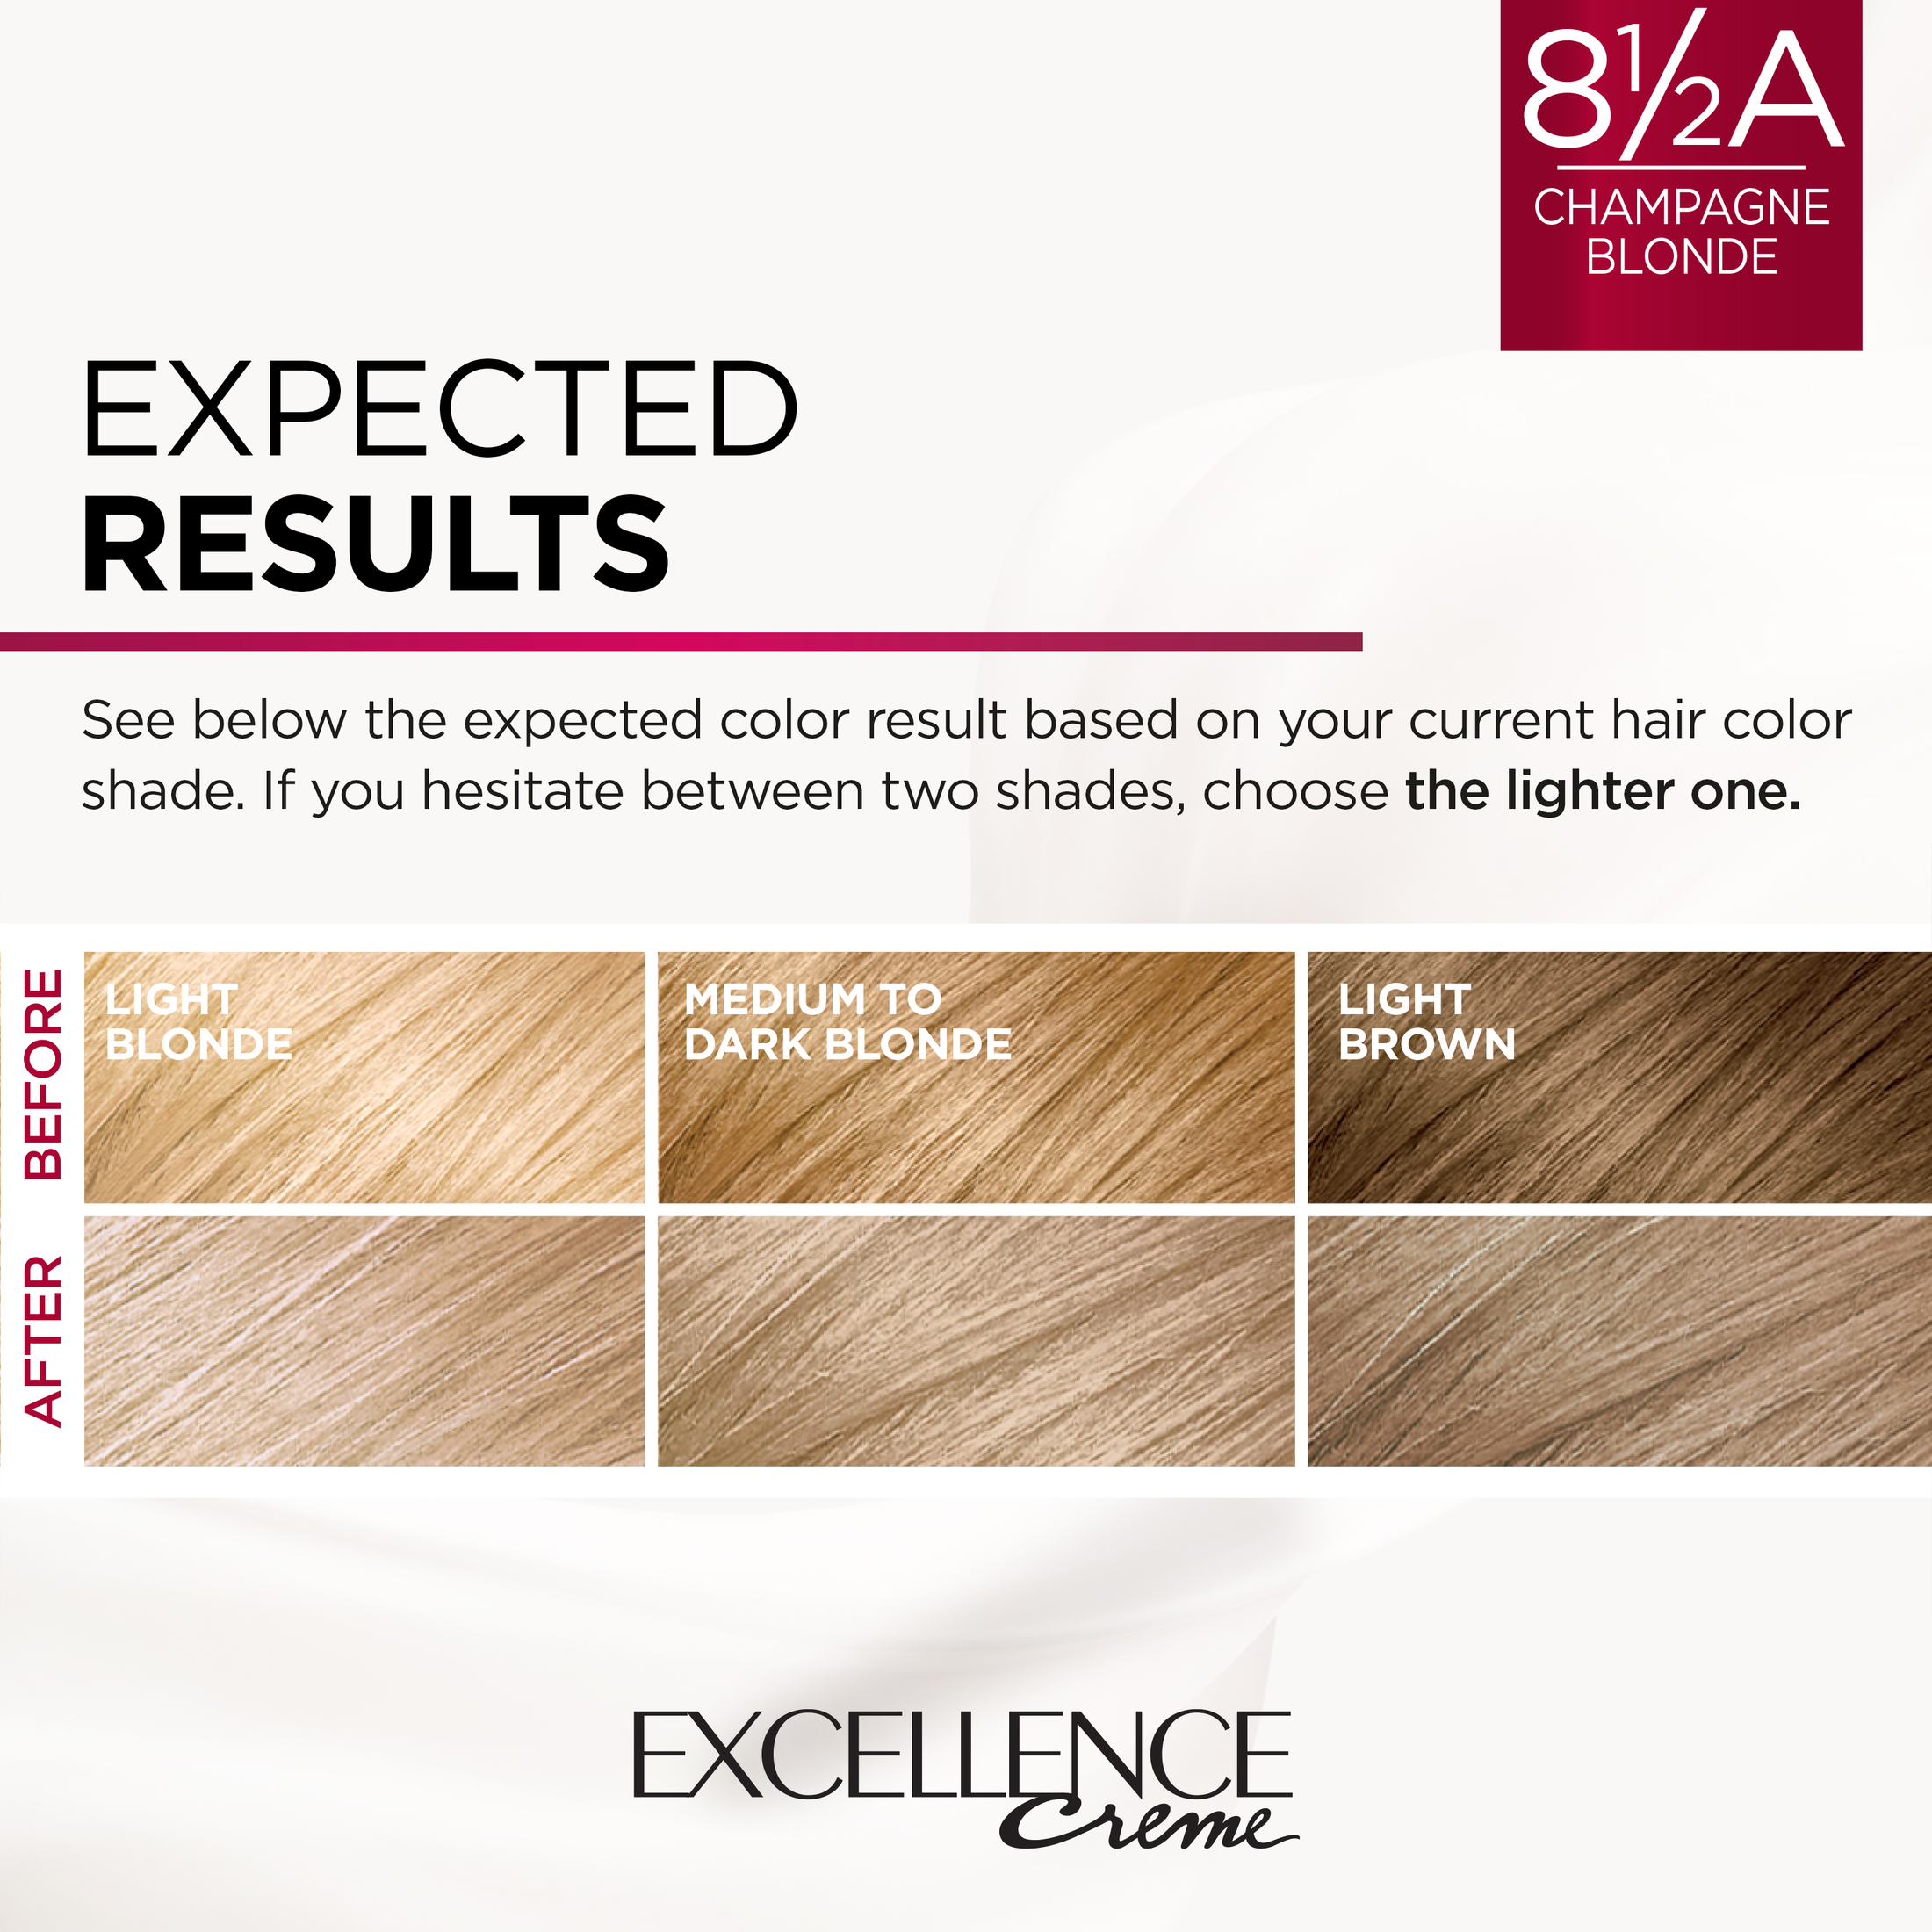 L'Oreal Paris Excellence Creme Level 3 Permanent Hair Color Kit, 8 1/2A Champagne Blonde - image 5 of 8